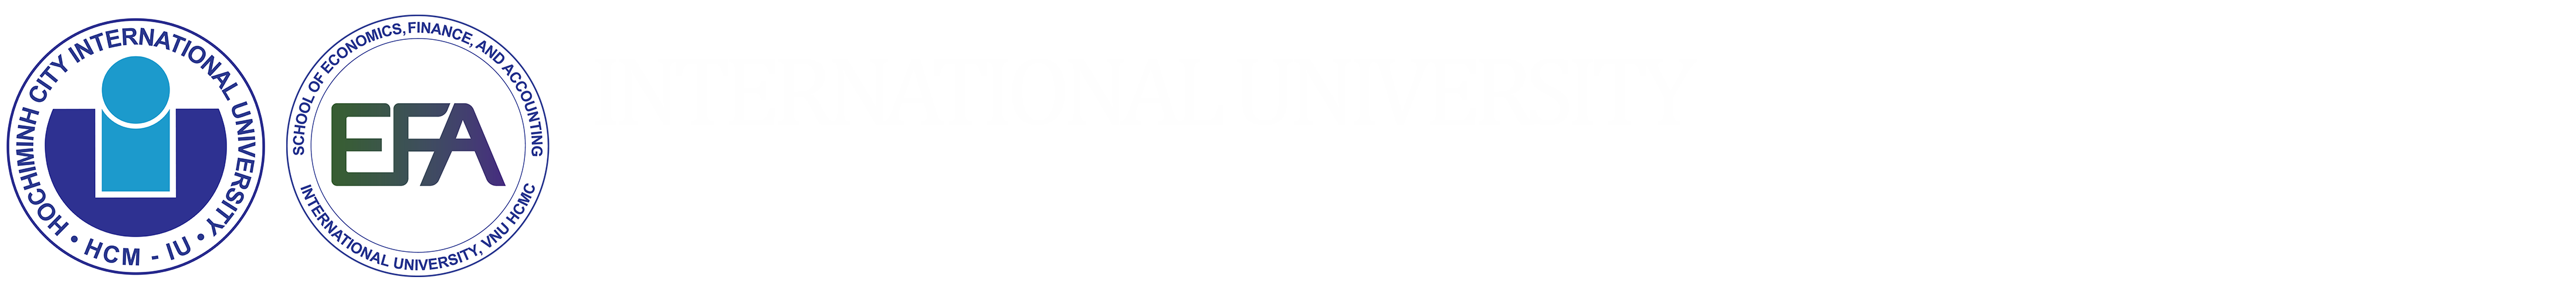 Mục tiêu | School of Economics, Finance, and Accounting